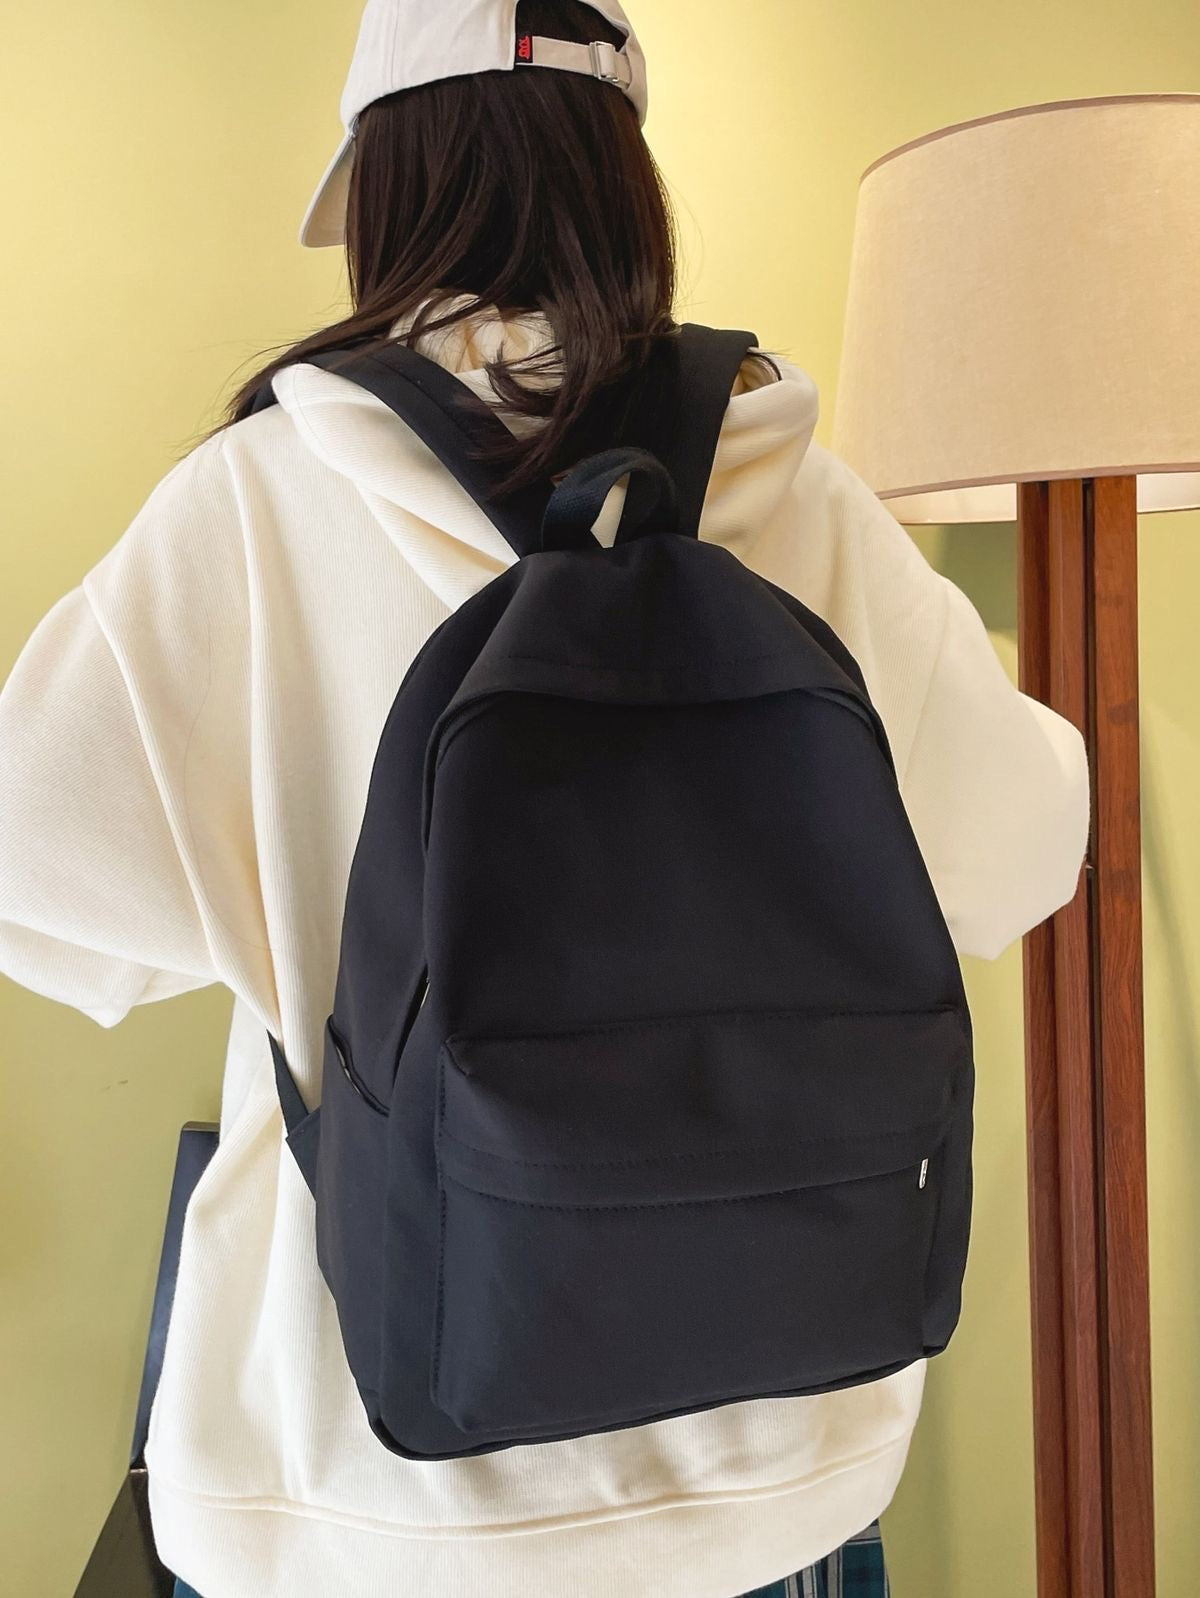 Sweetpea Minimalist Backpack in Black